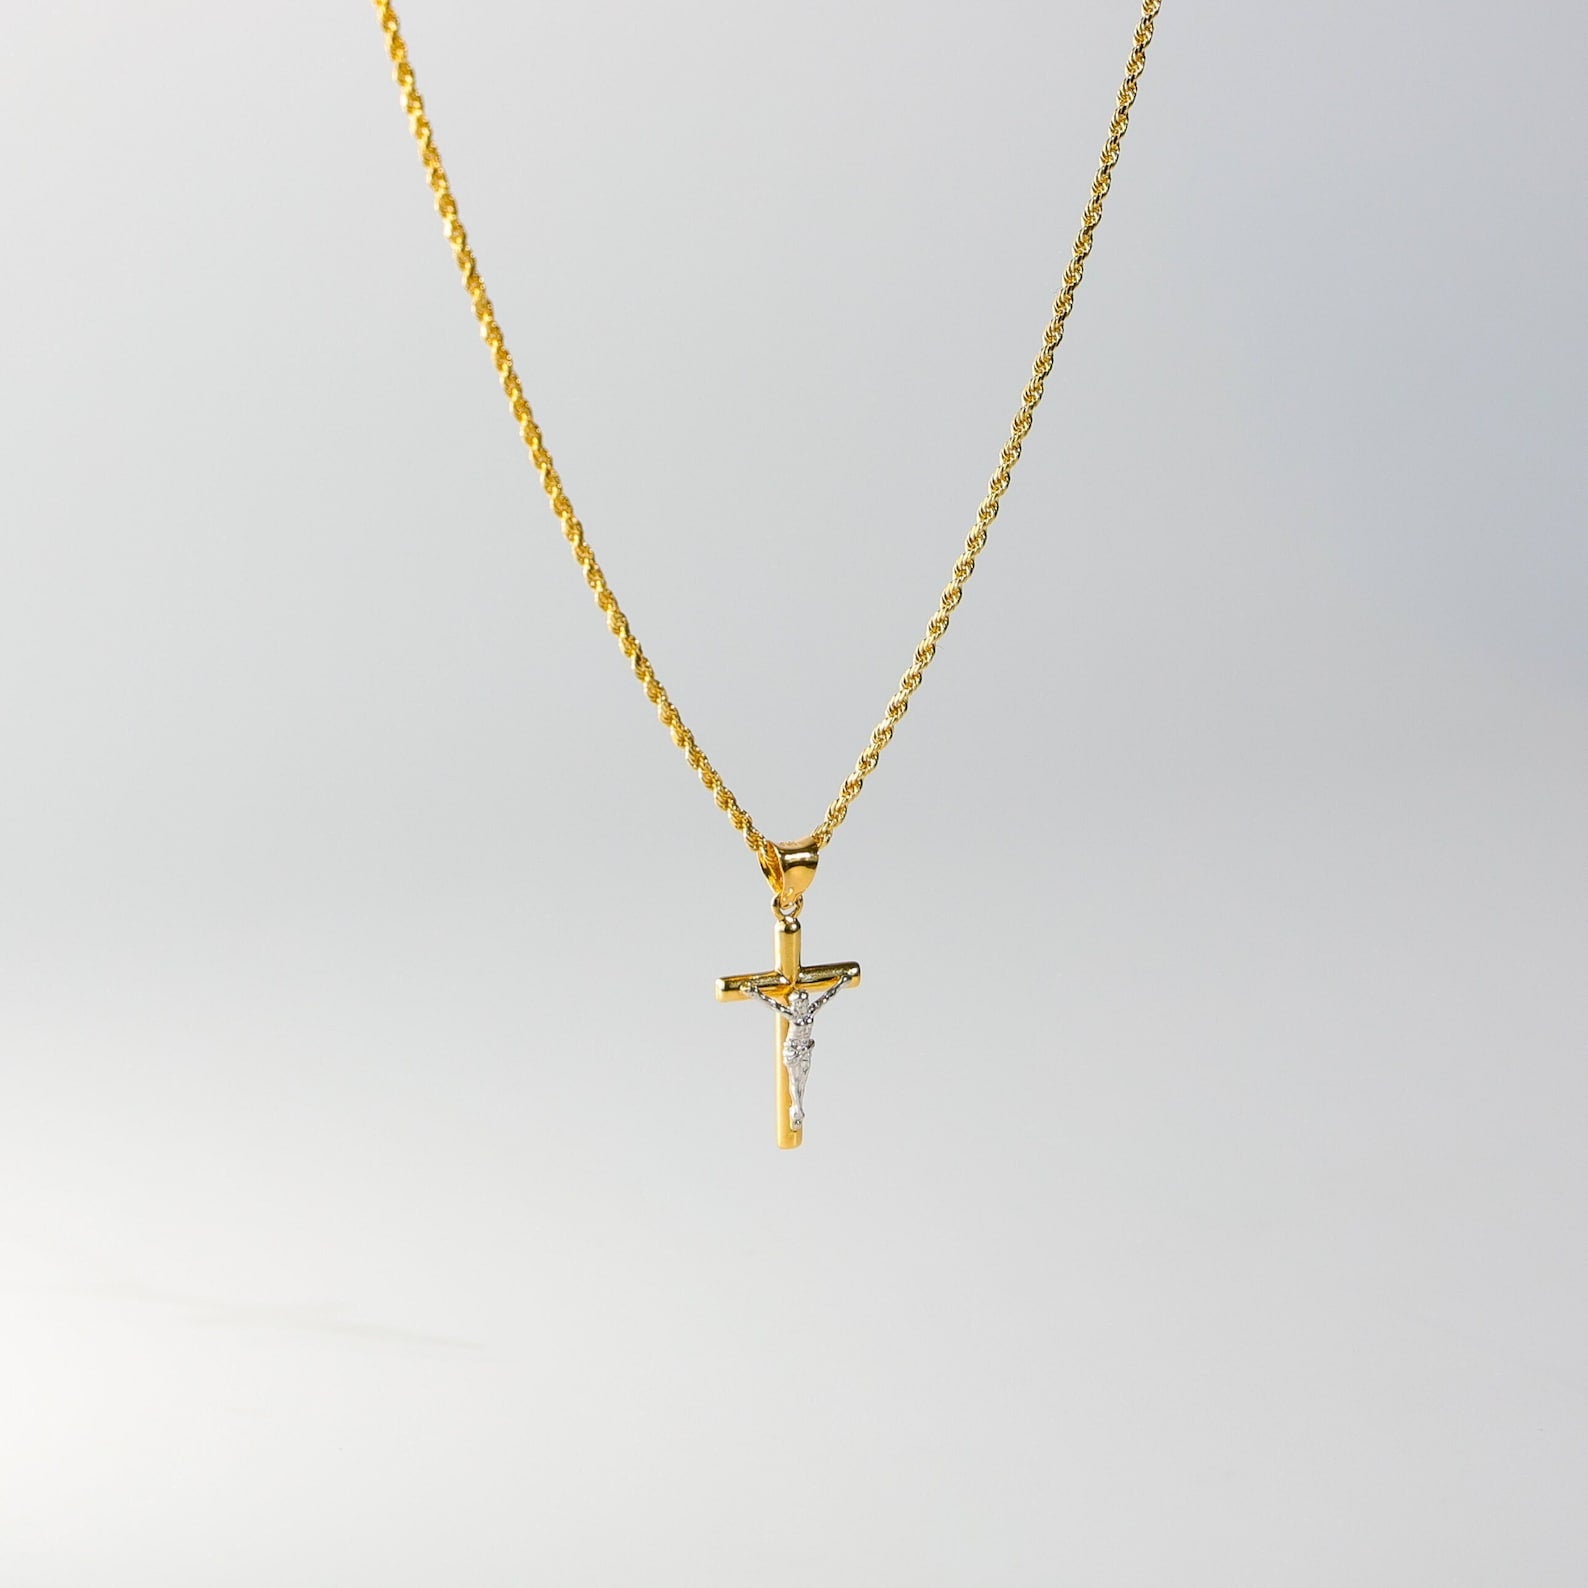 Gold Jesus Crucifix Cross Pendant Model-49 - Charlie & Co. Jewelry